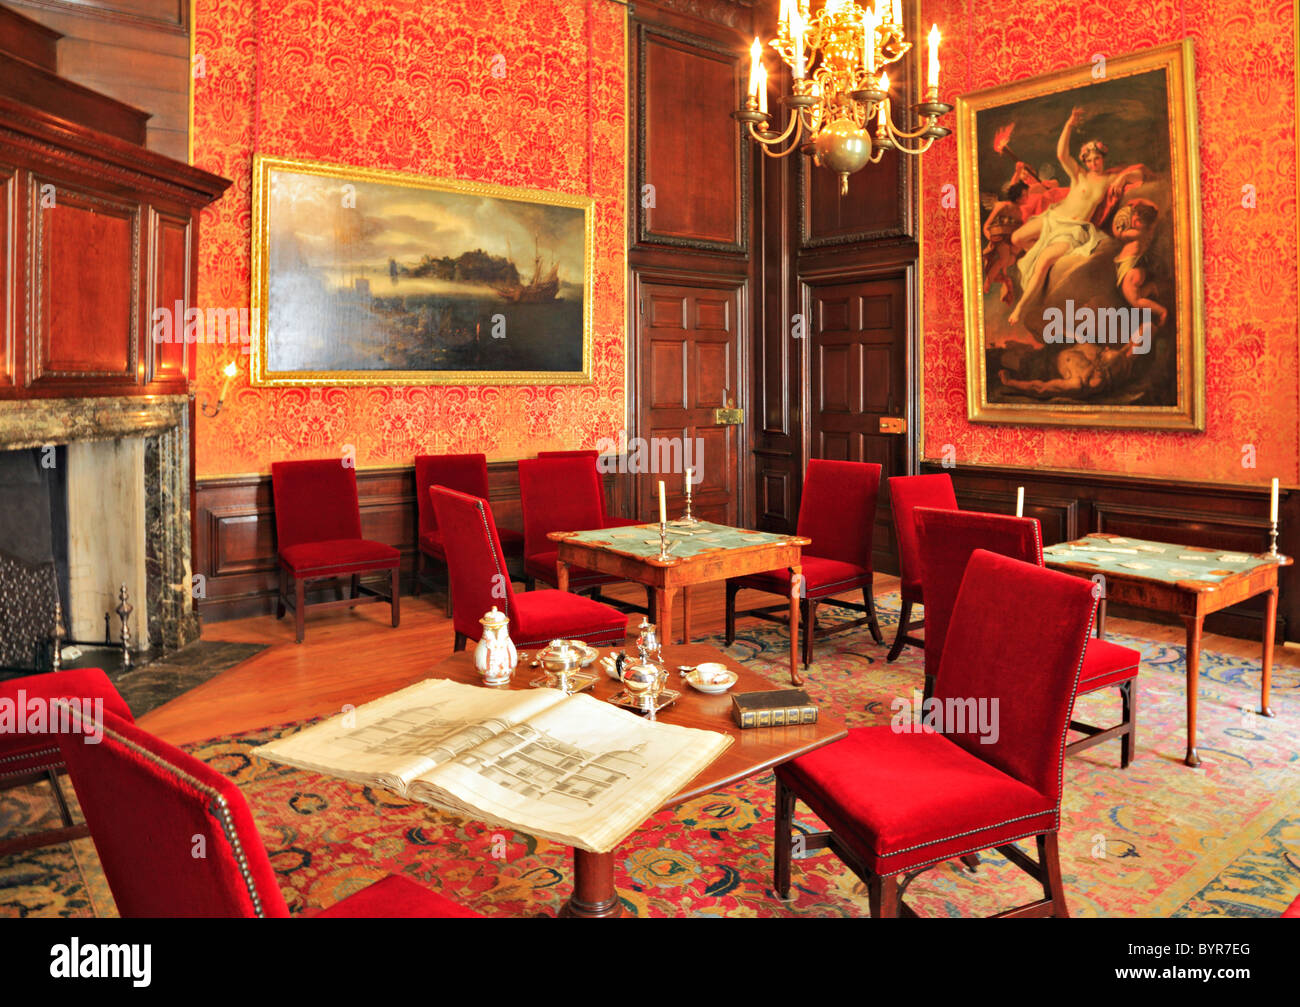 Hampton court palace interior hi res stock photography and images Alamy